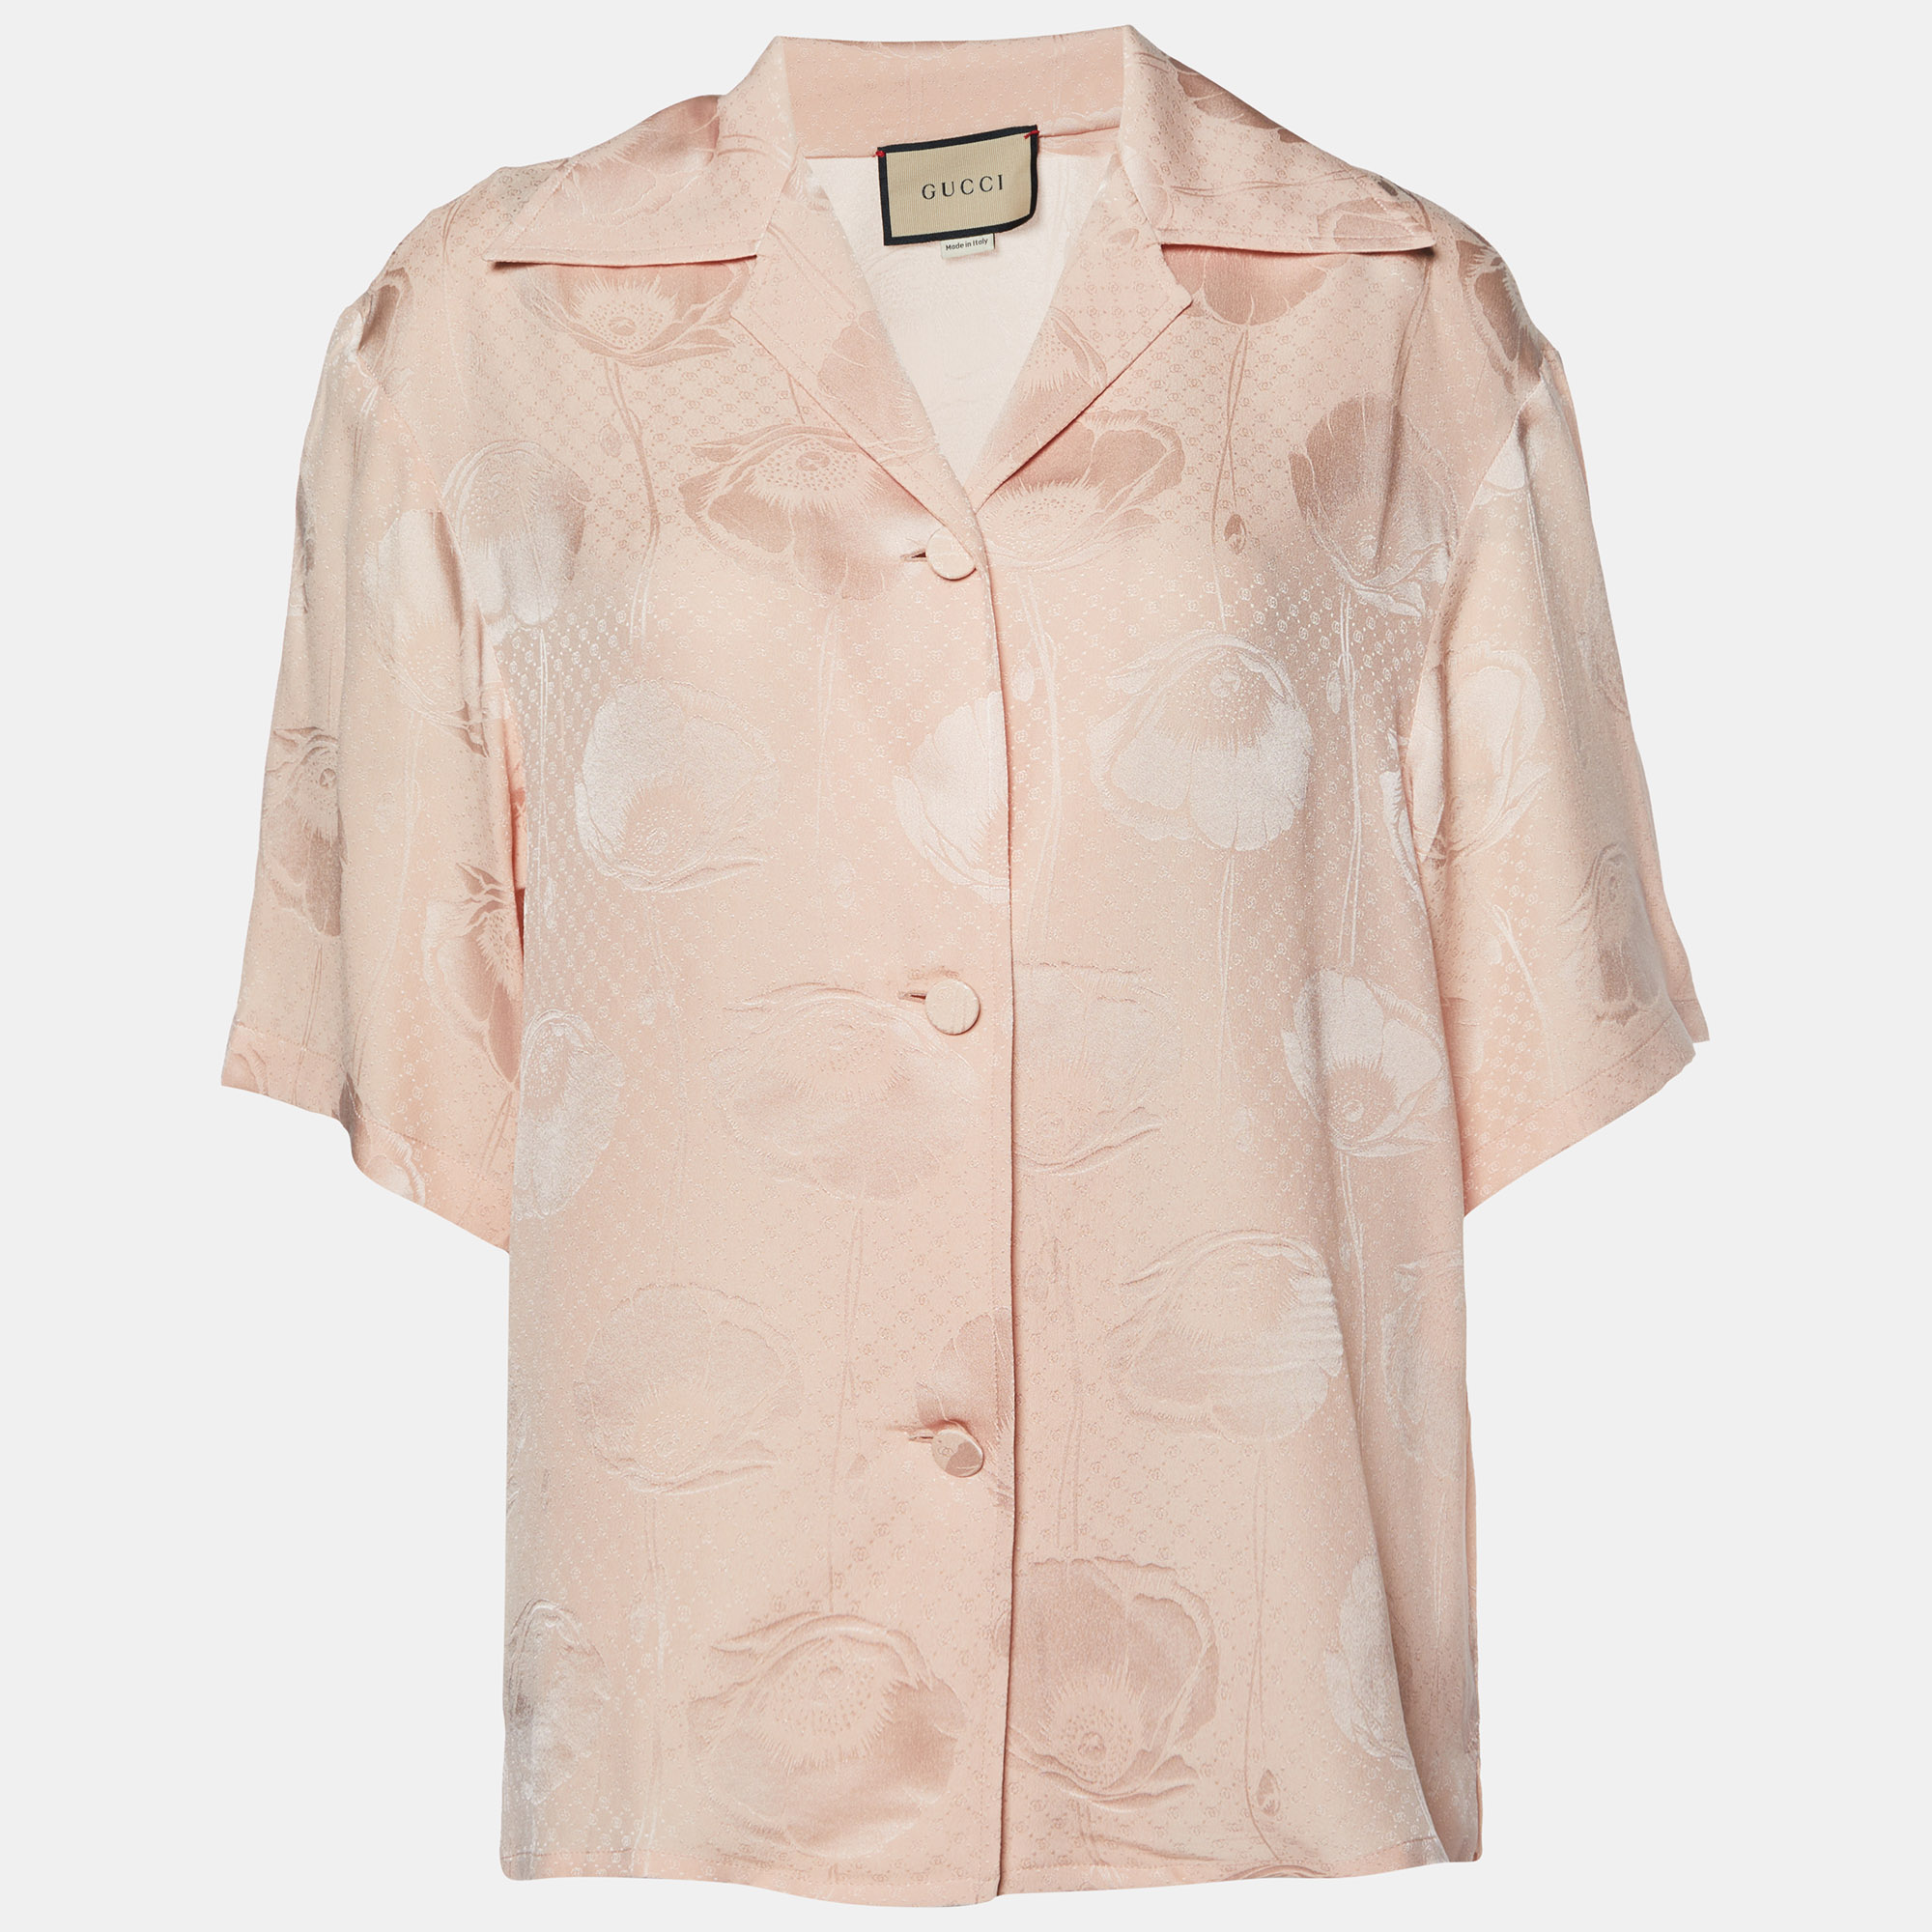 

Gucci Pale Pink Floral Jacquard Silk Button Front Shirt S